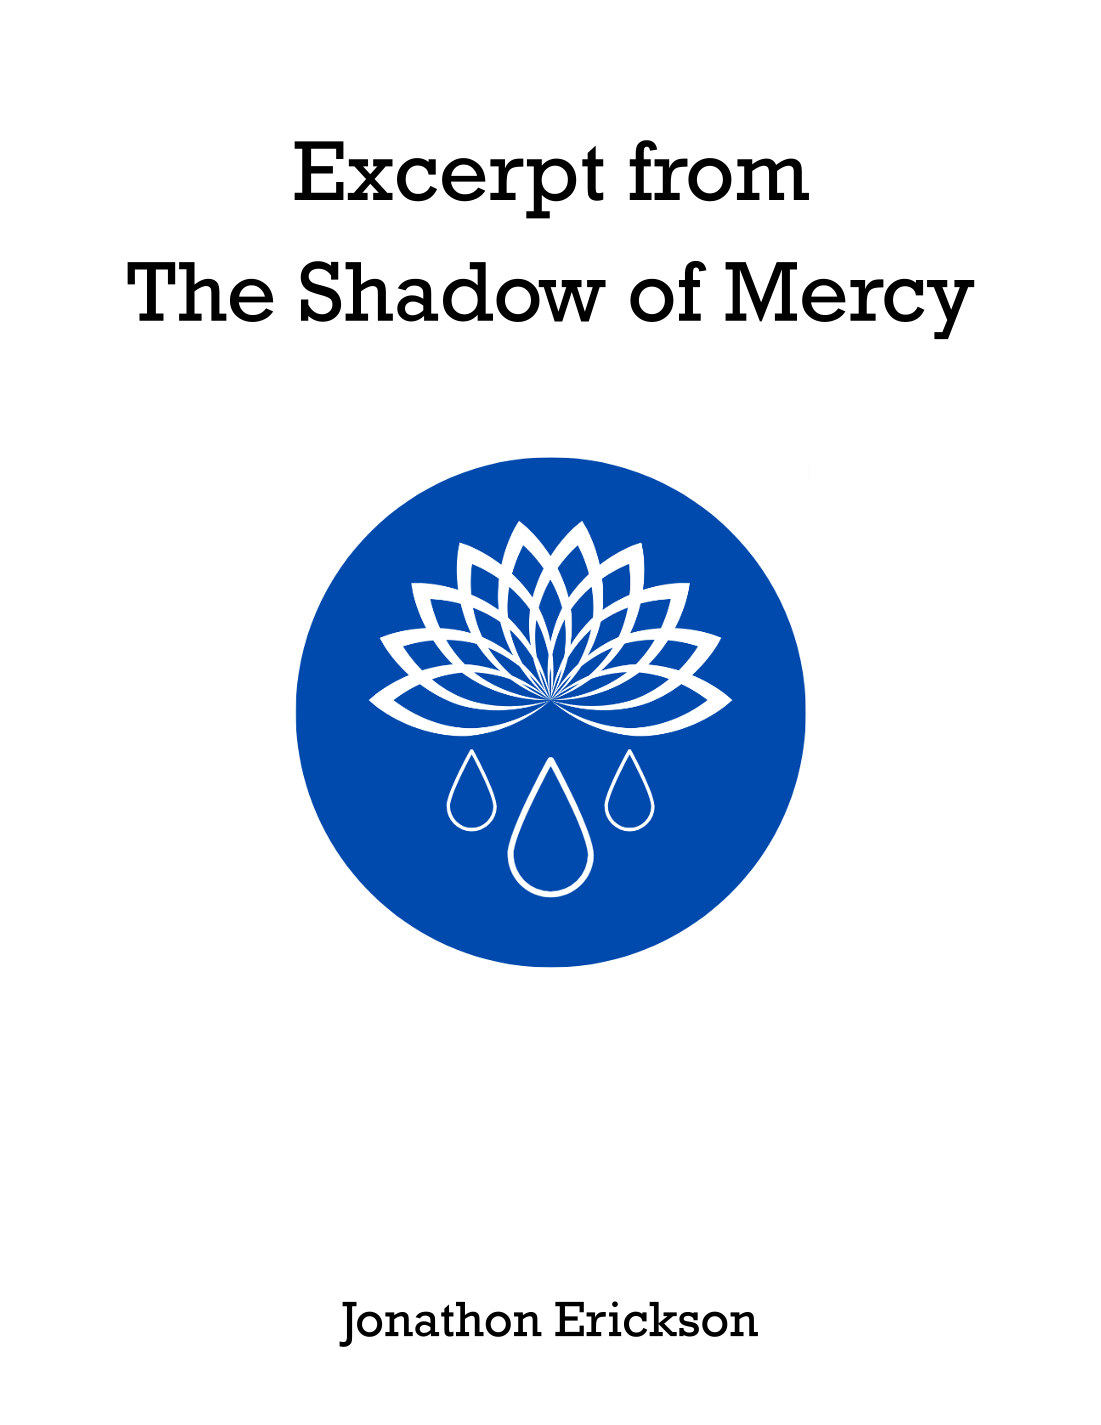 Jonathon Erickson-Excerpt from The Shadow of Mercy